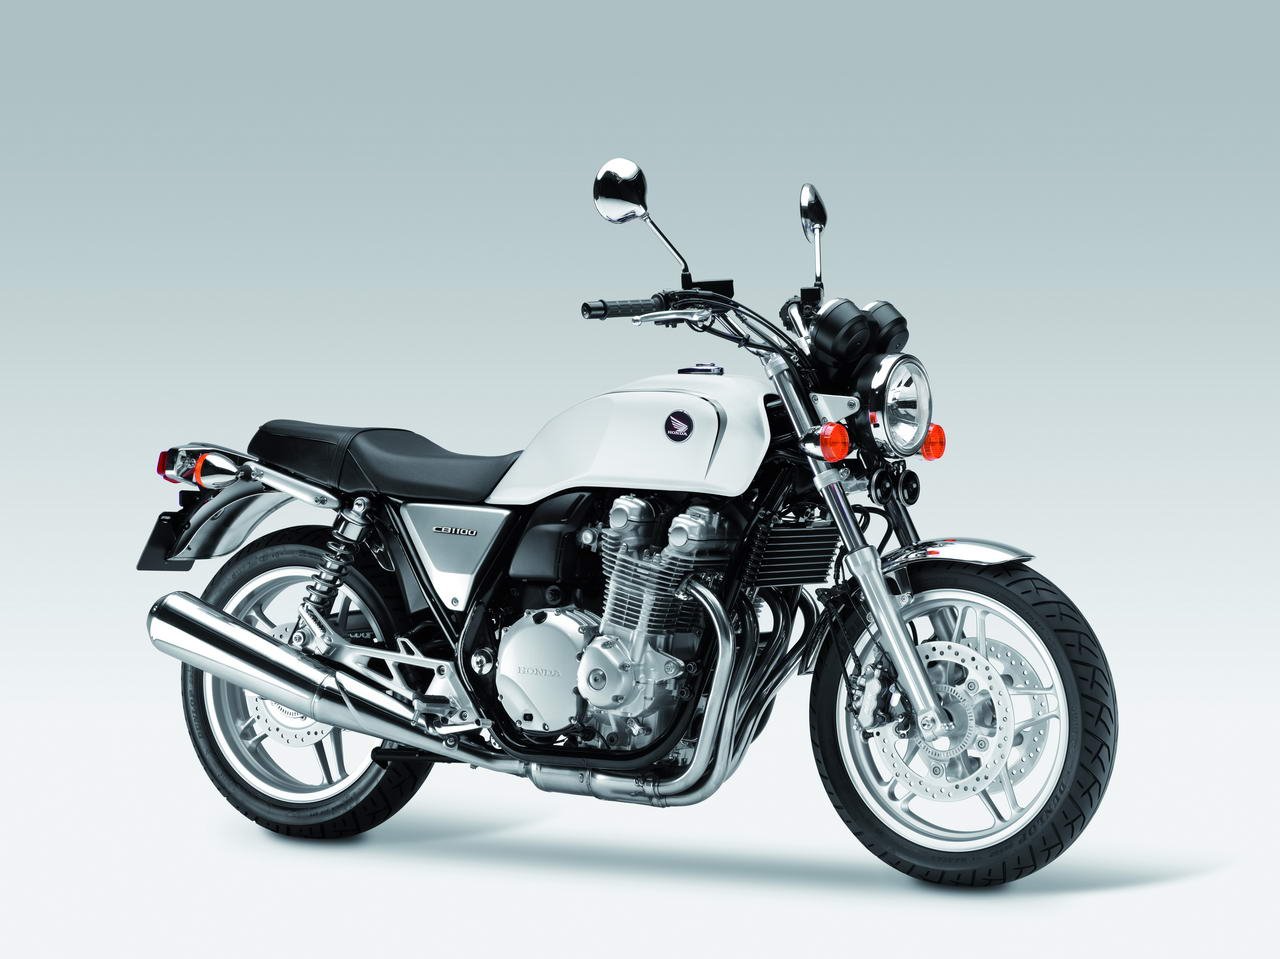 Listino Honda SH150i ABS Scooter 150-300 - image 14645_honda-cb1100abs on https://moto.motori.net